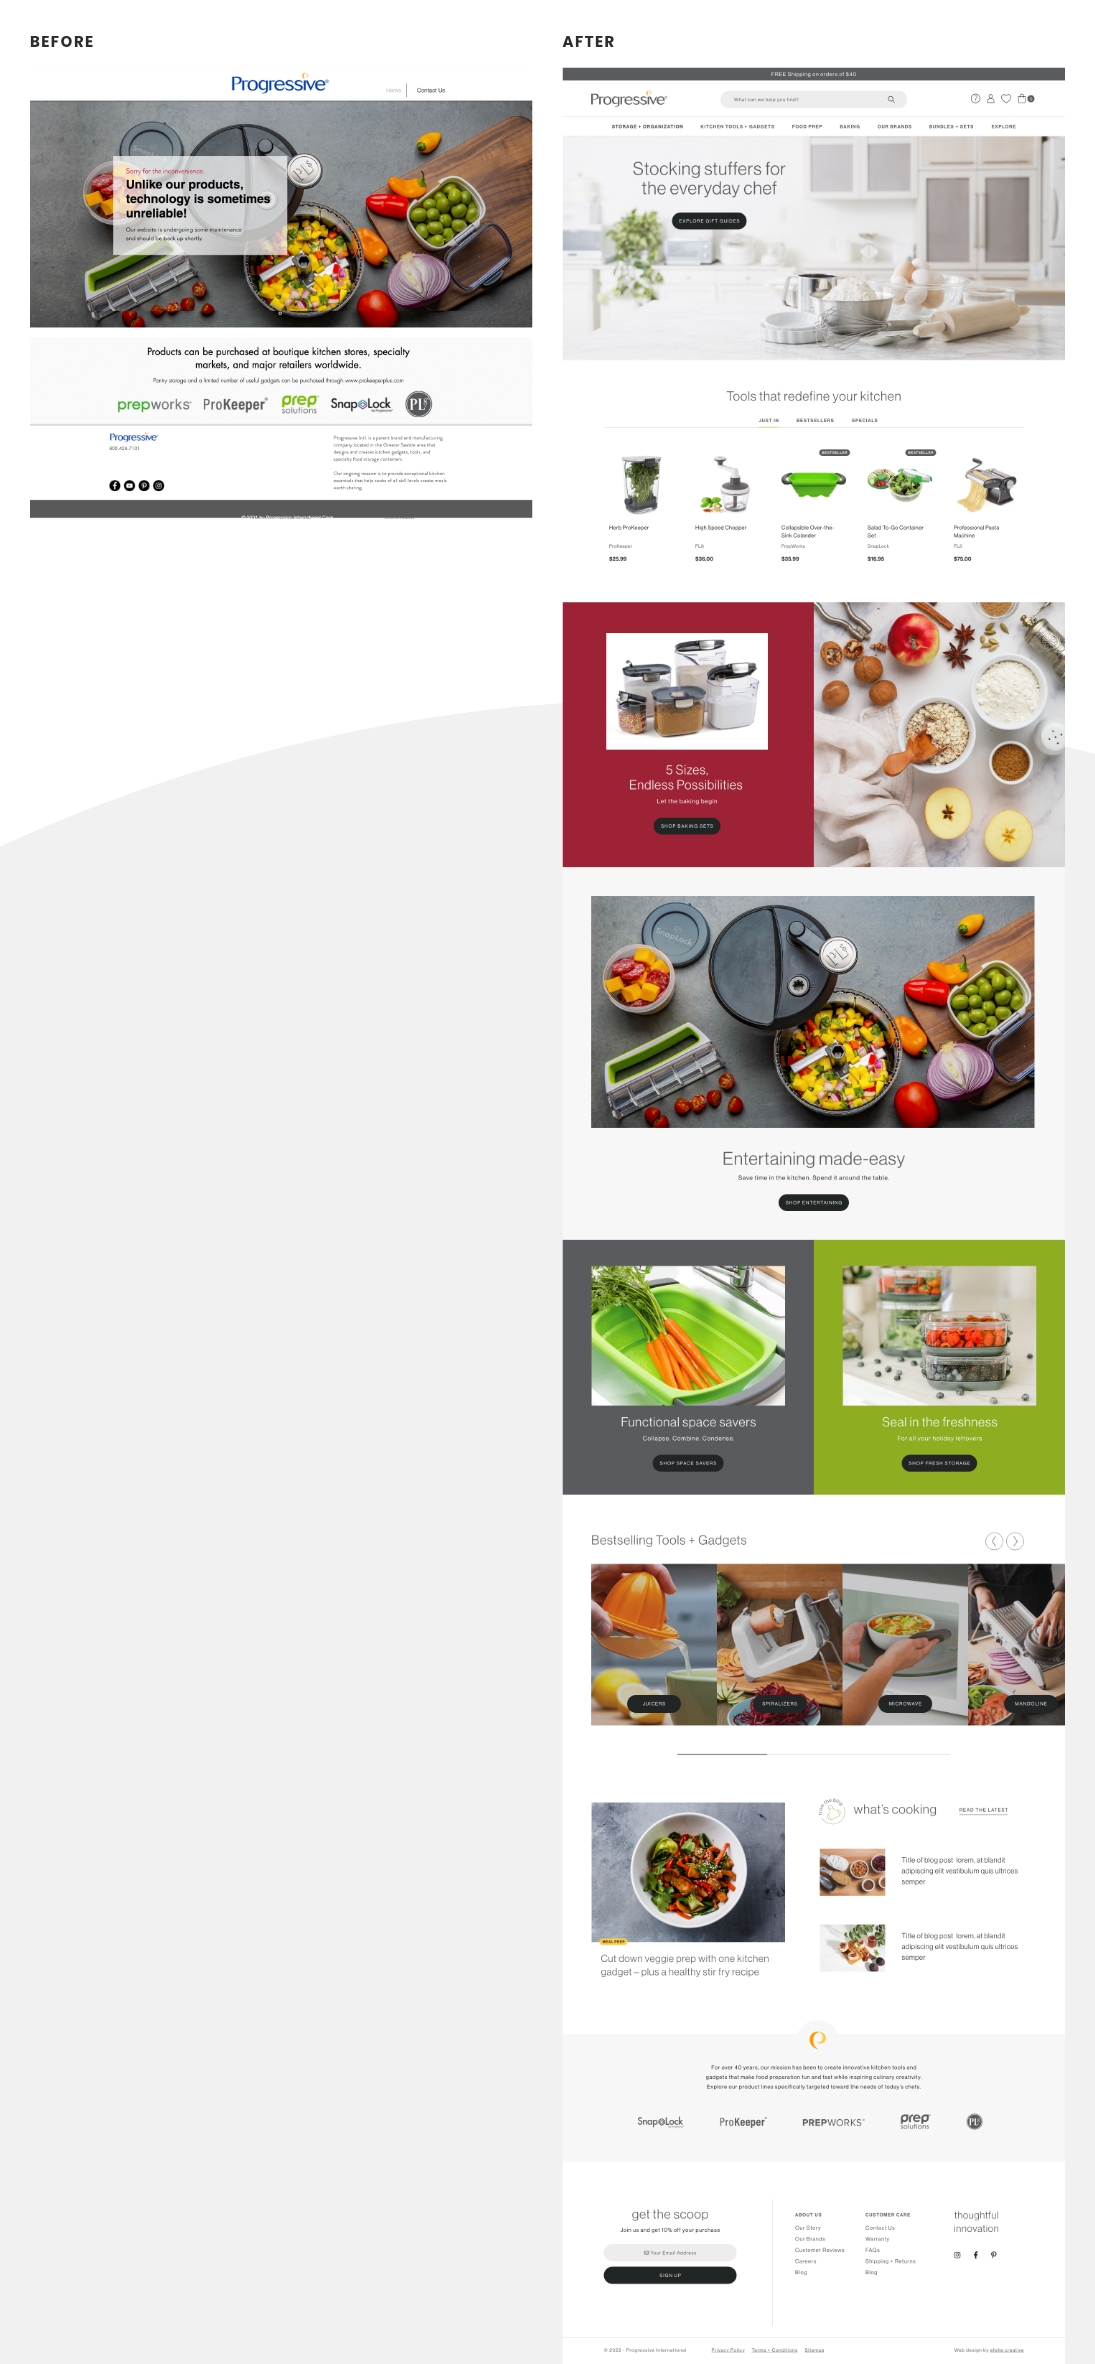 progressive-international-new-ecommerce-website-design-before-and-after.jpg